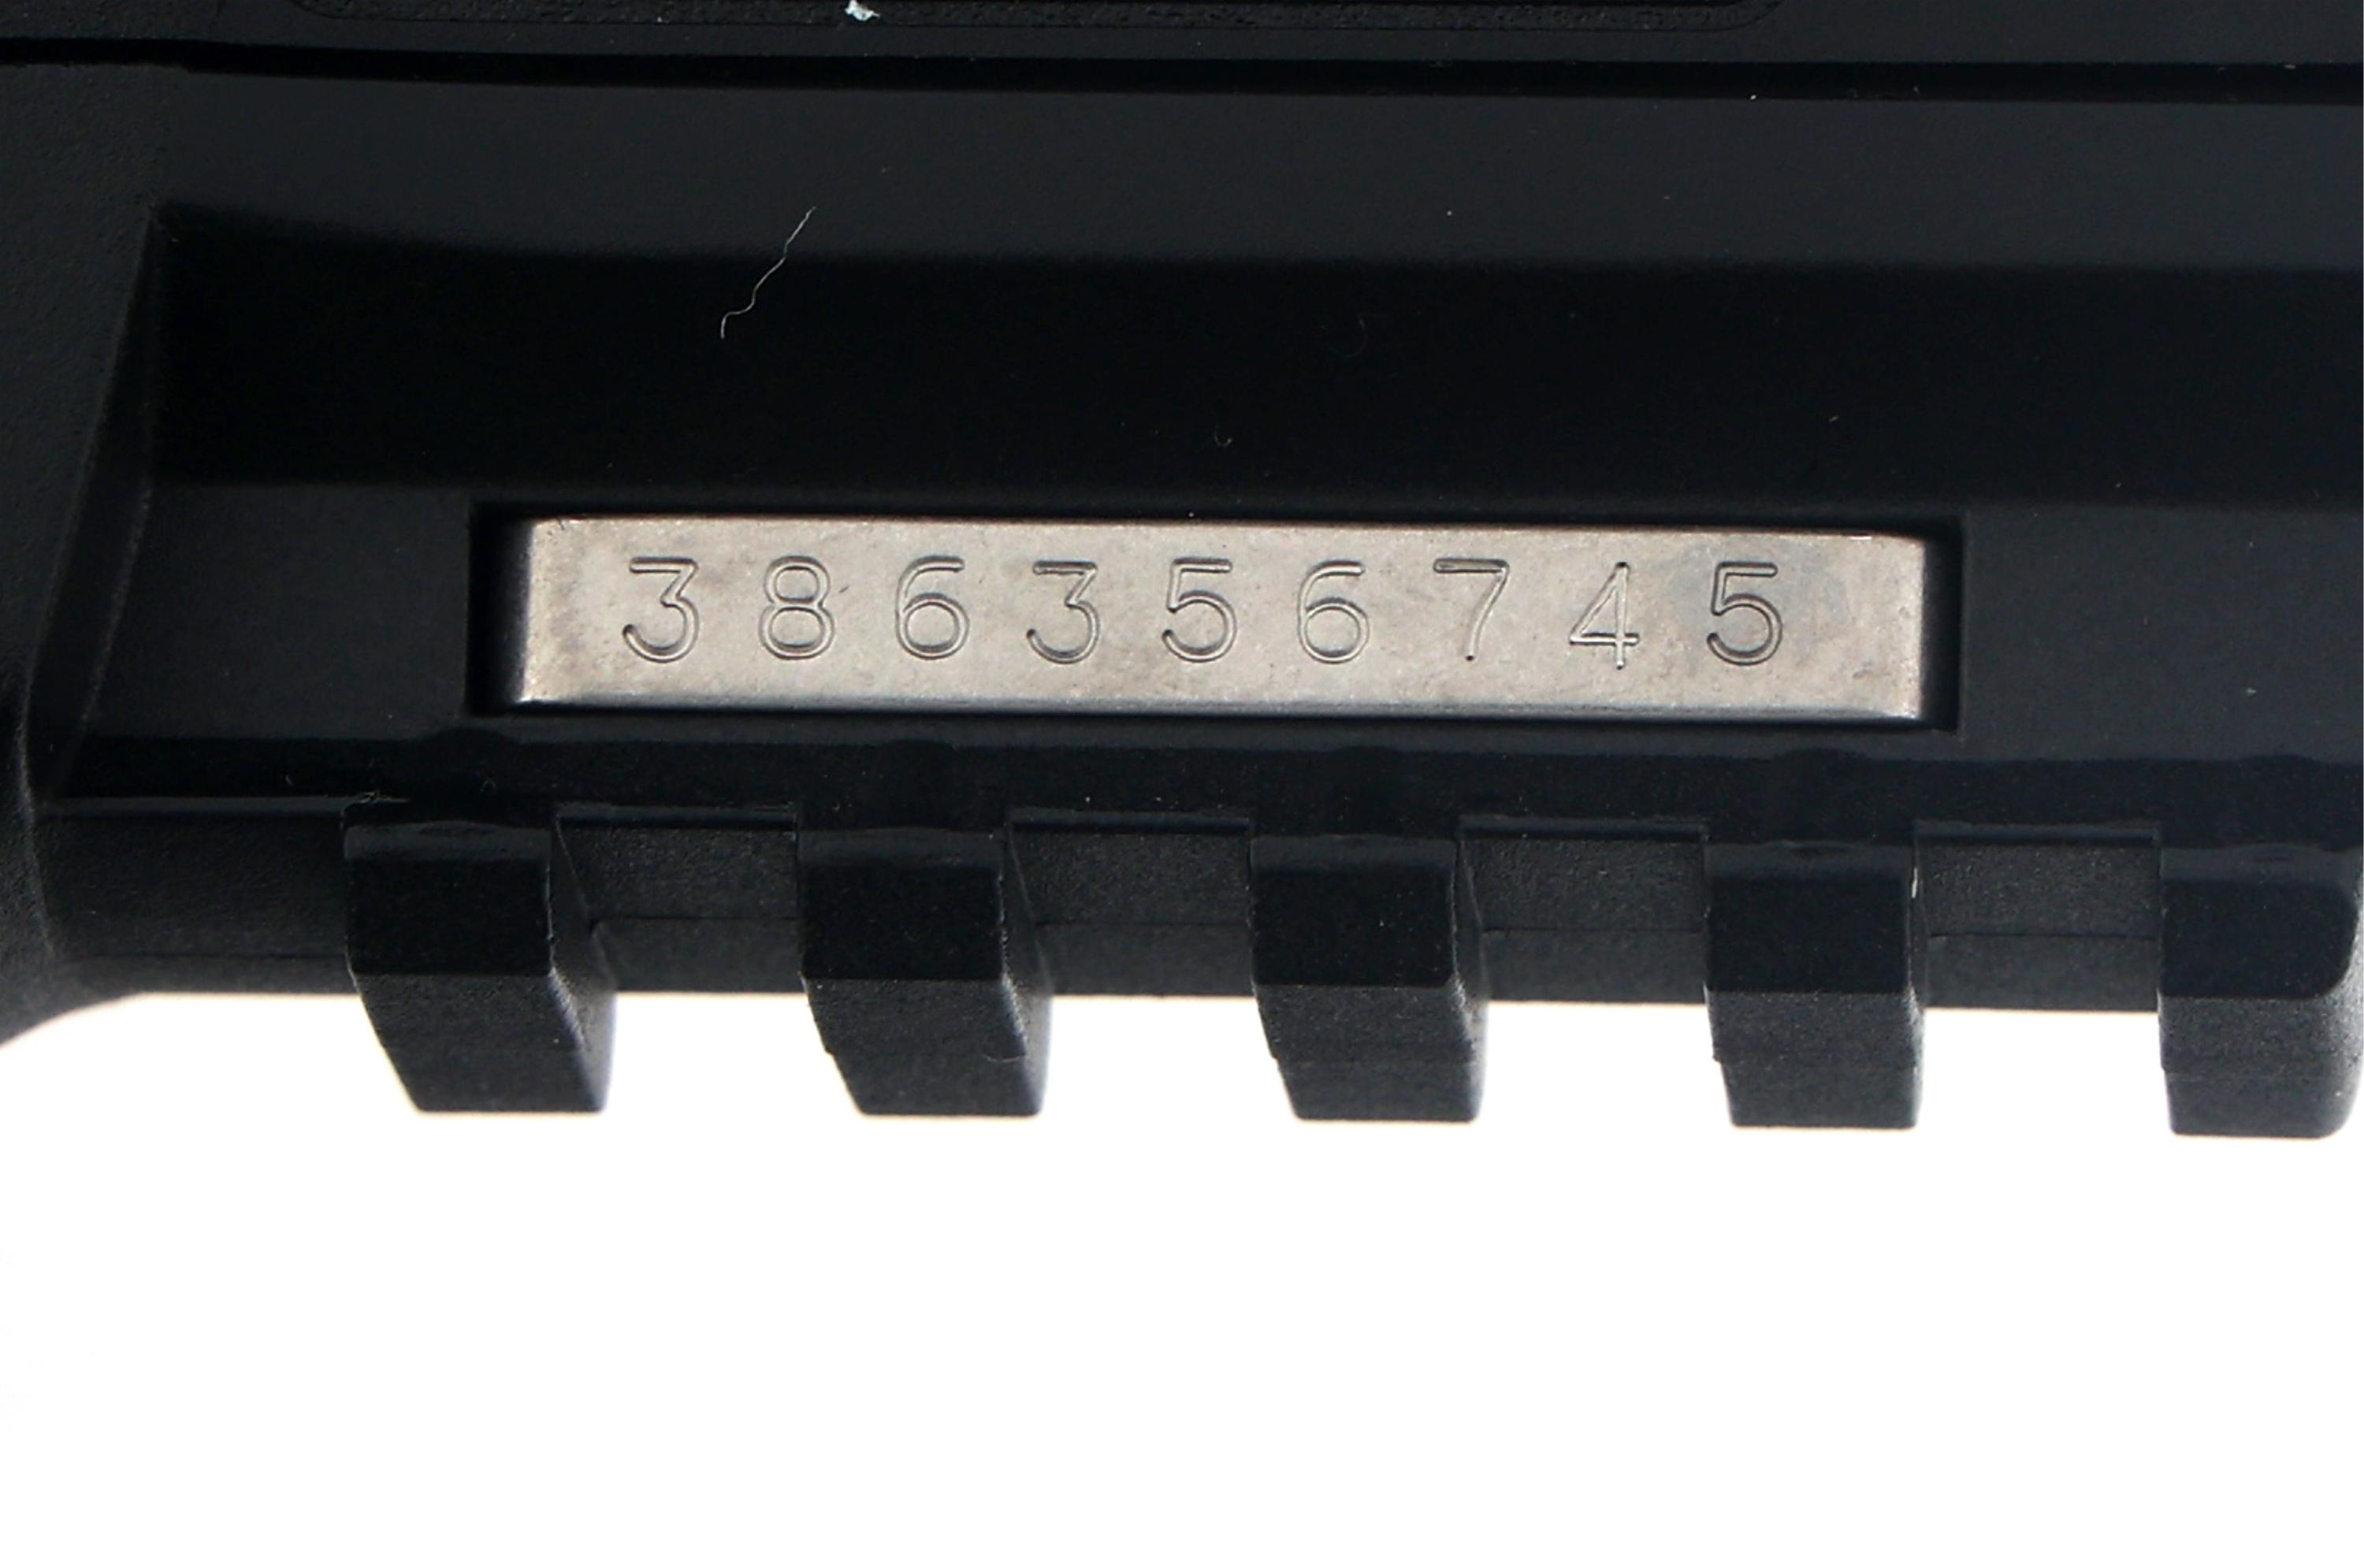 FN HERSTAL MODEL FIVE-SEVEN 5.7x28mm CAL PISTOL